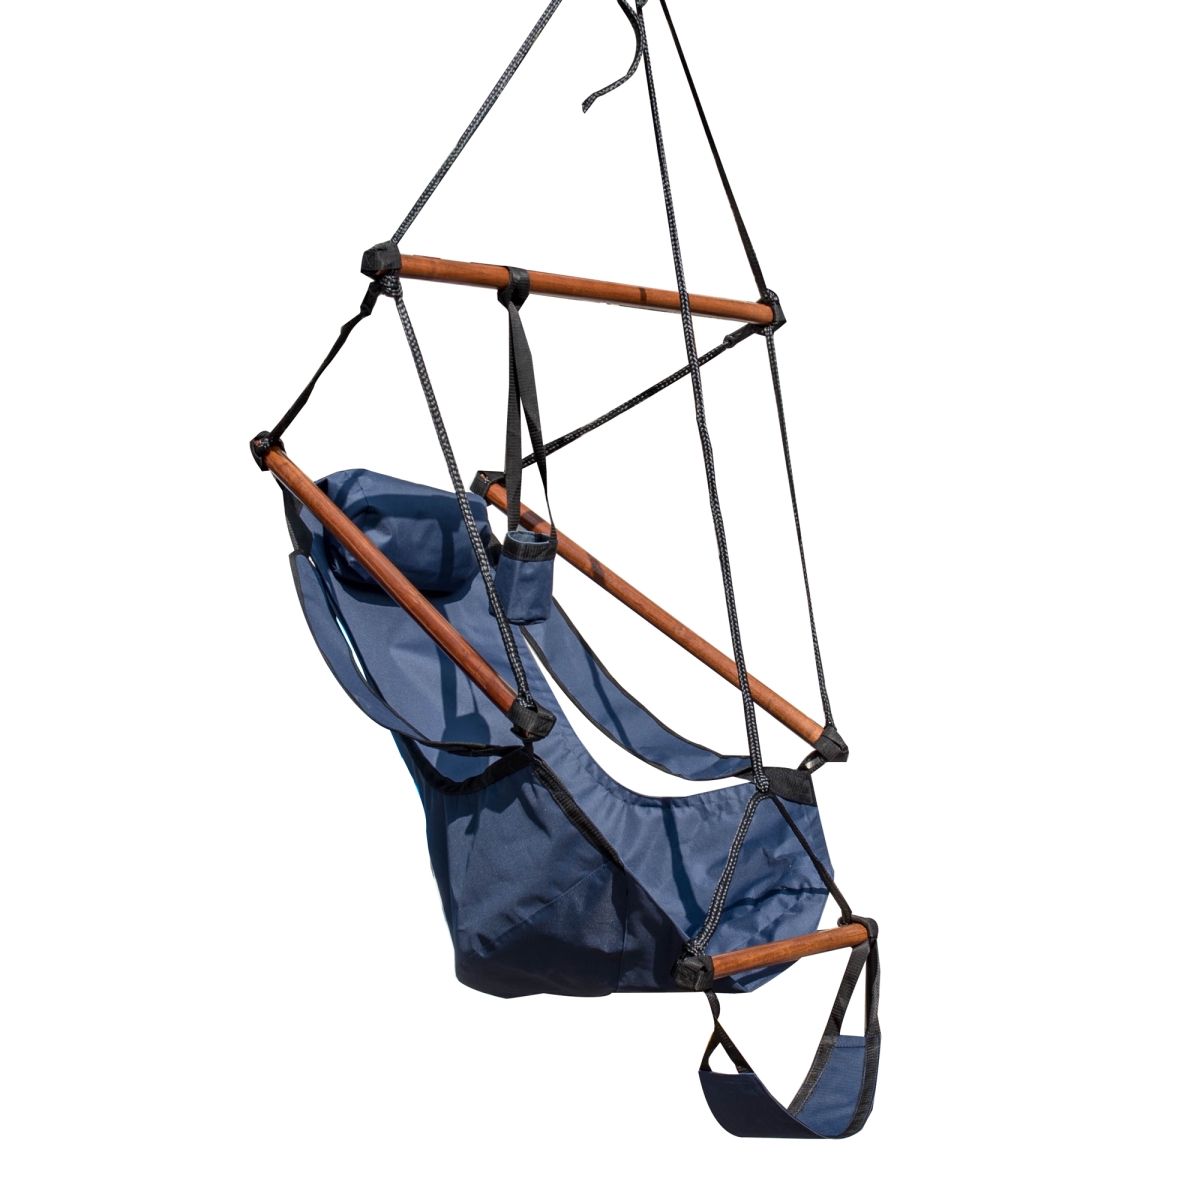 Nu3200 Hanging Hammock Swing Chair For Yard, Patio - Midnight, Blue